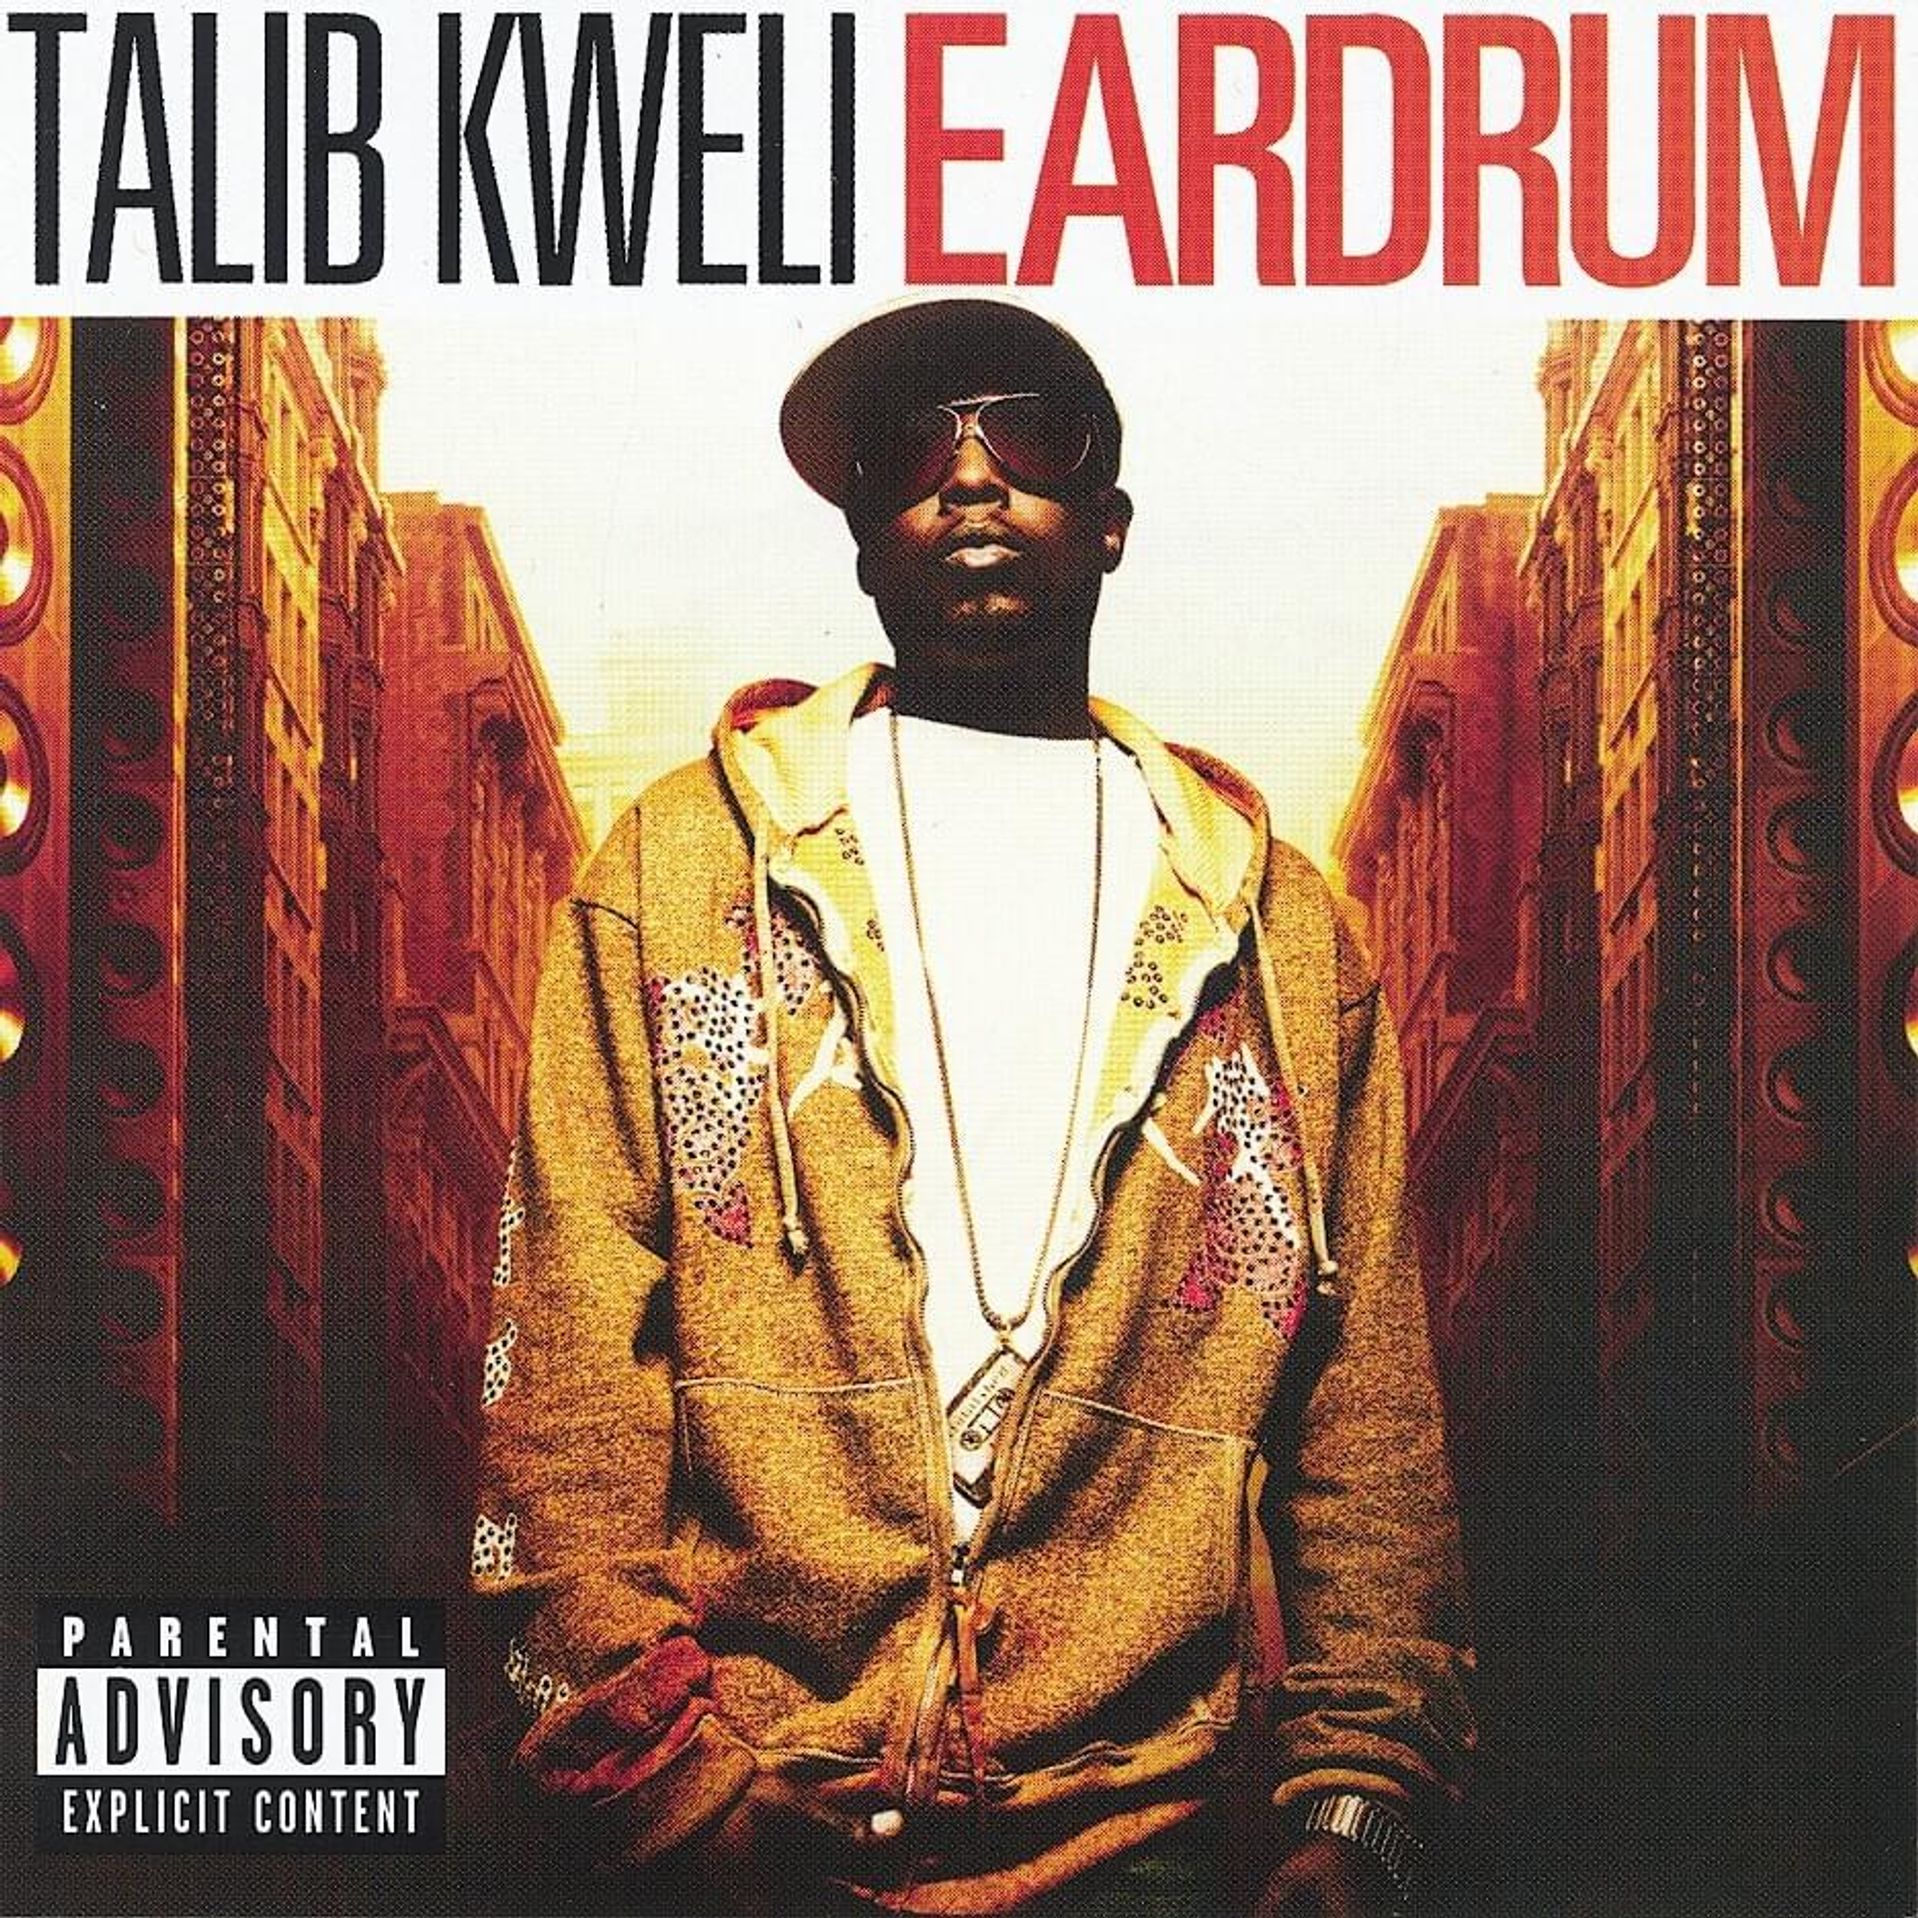 Album Title: Eardrum by: Talib Kweli